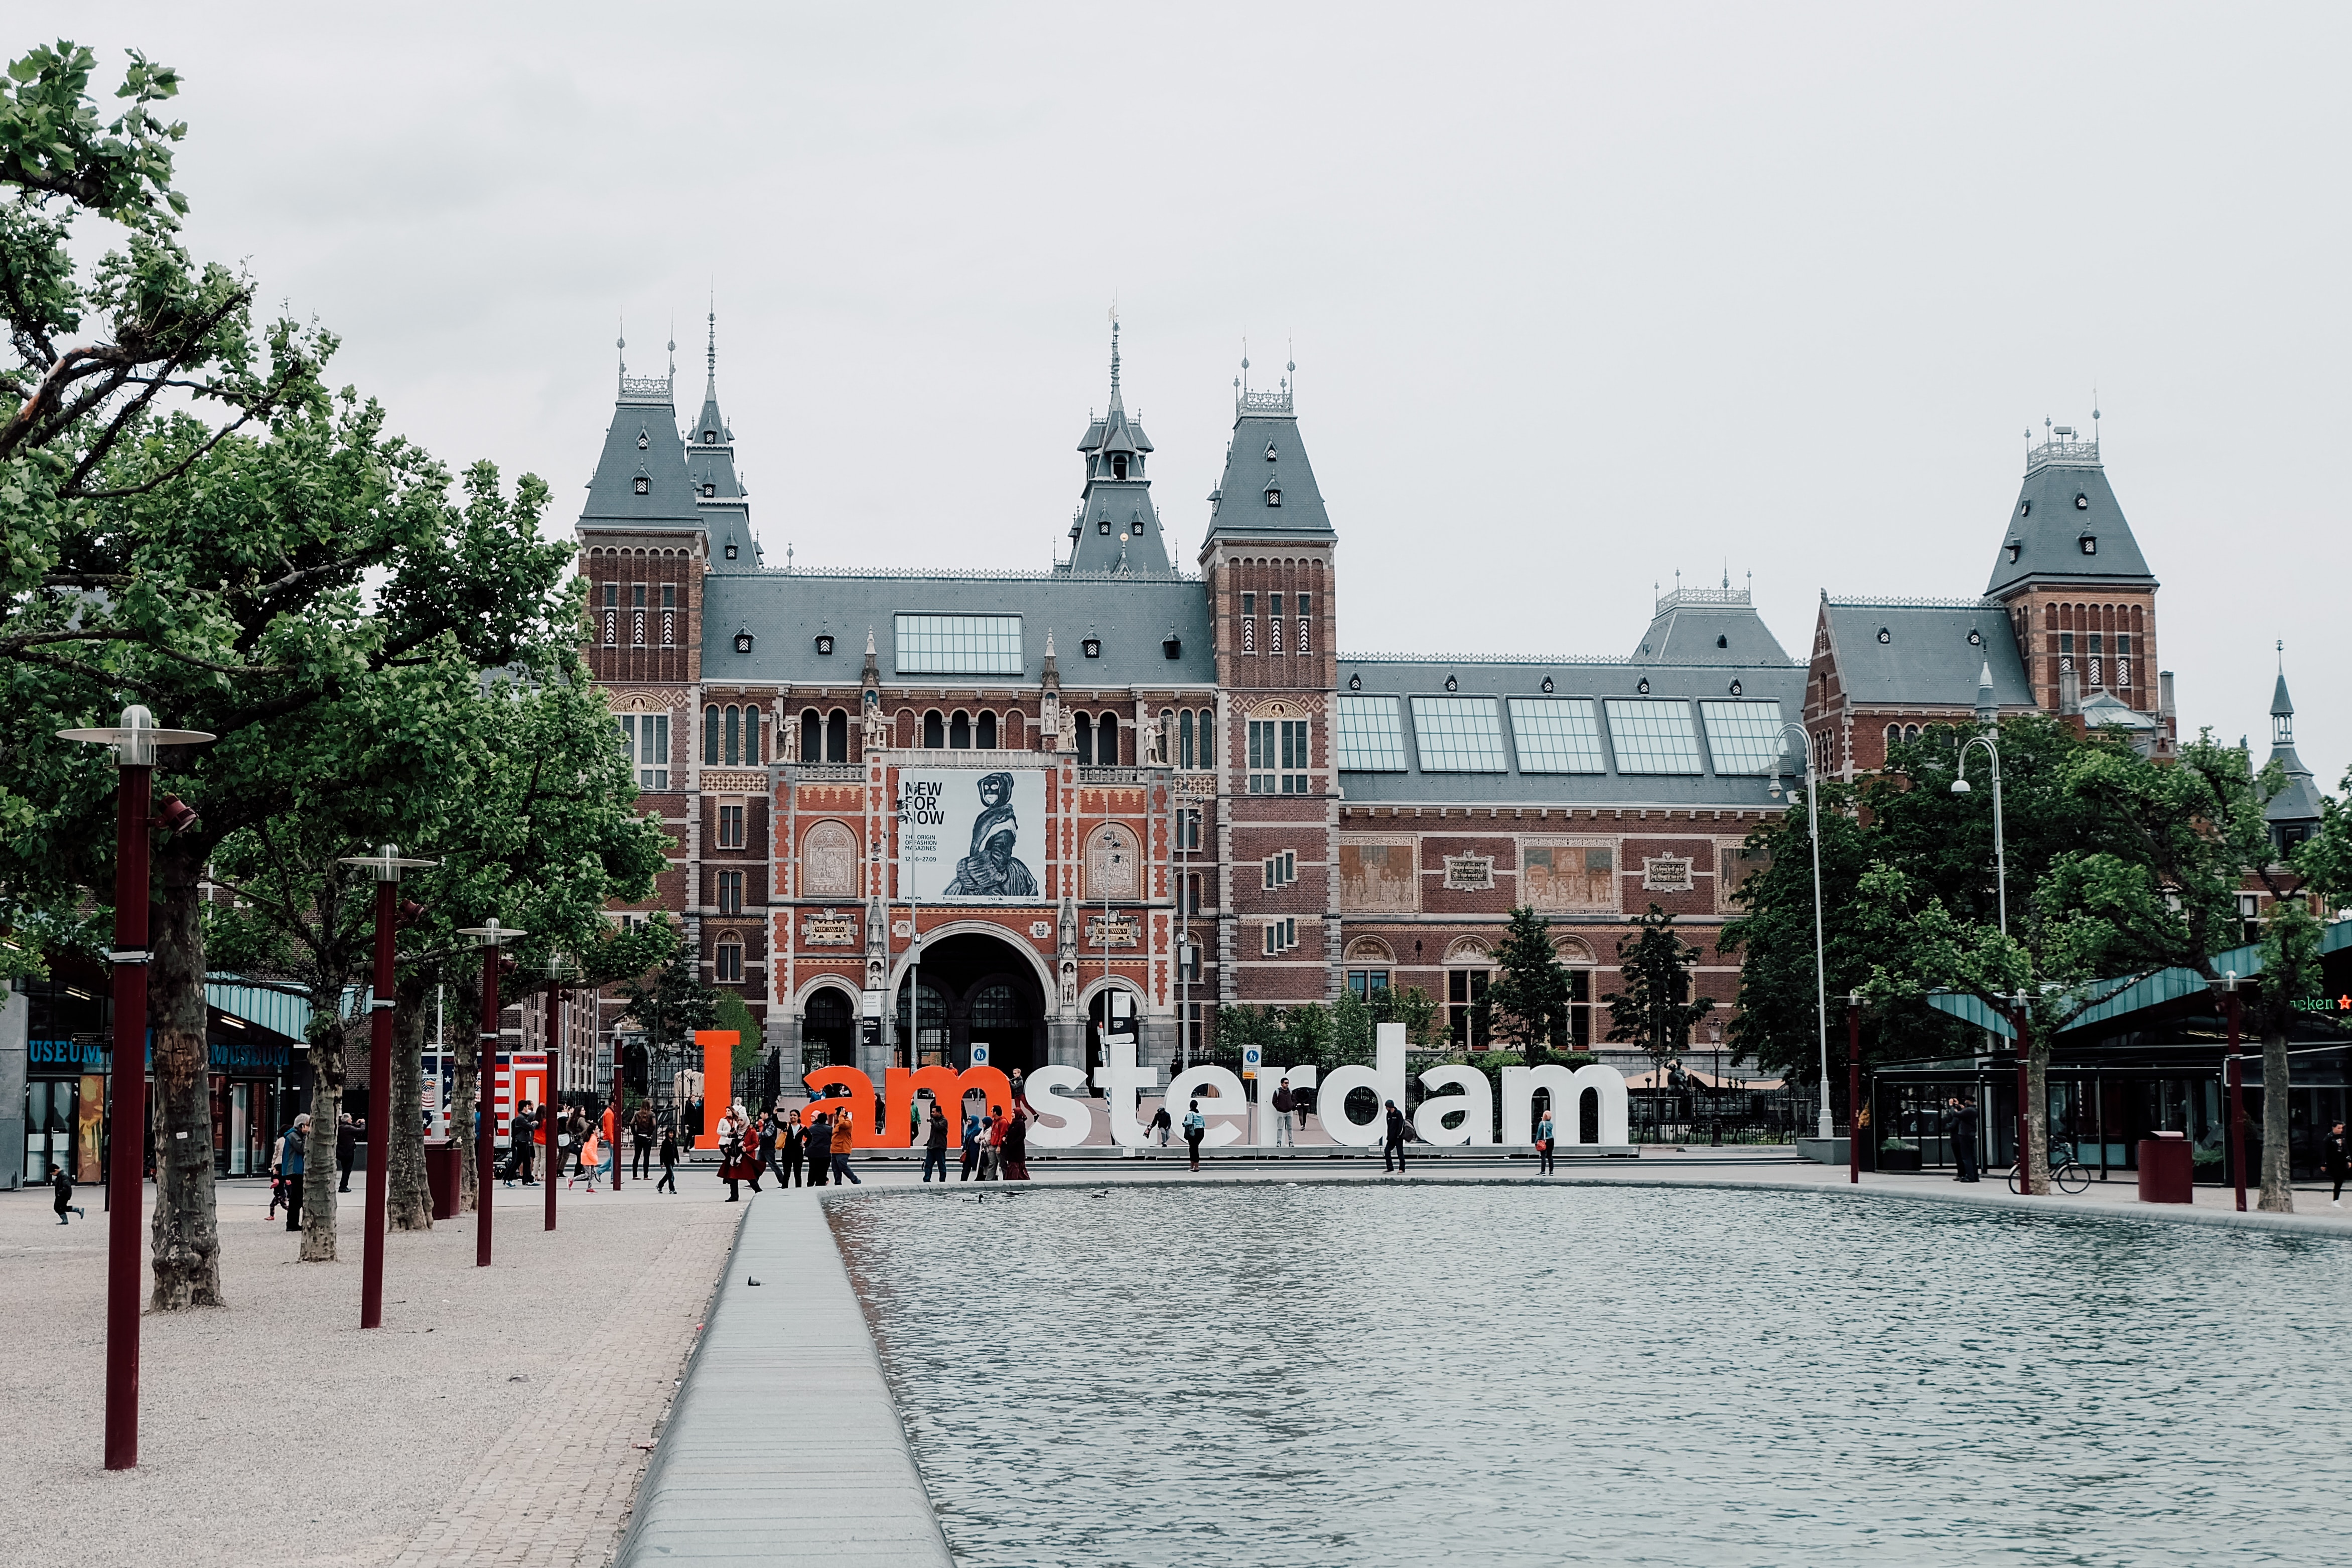 Sex Tourism in Amsterdam